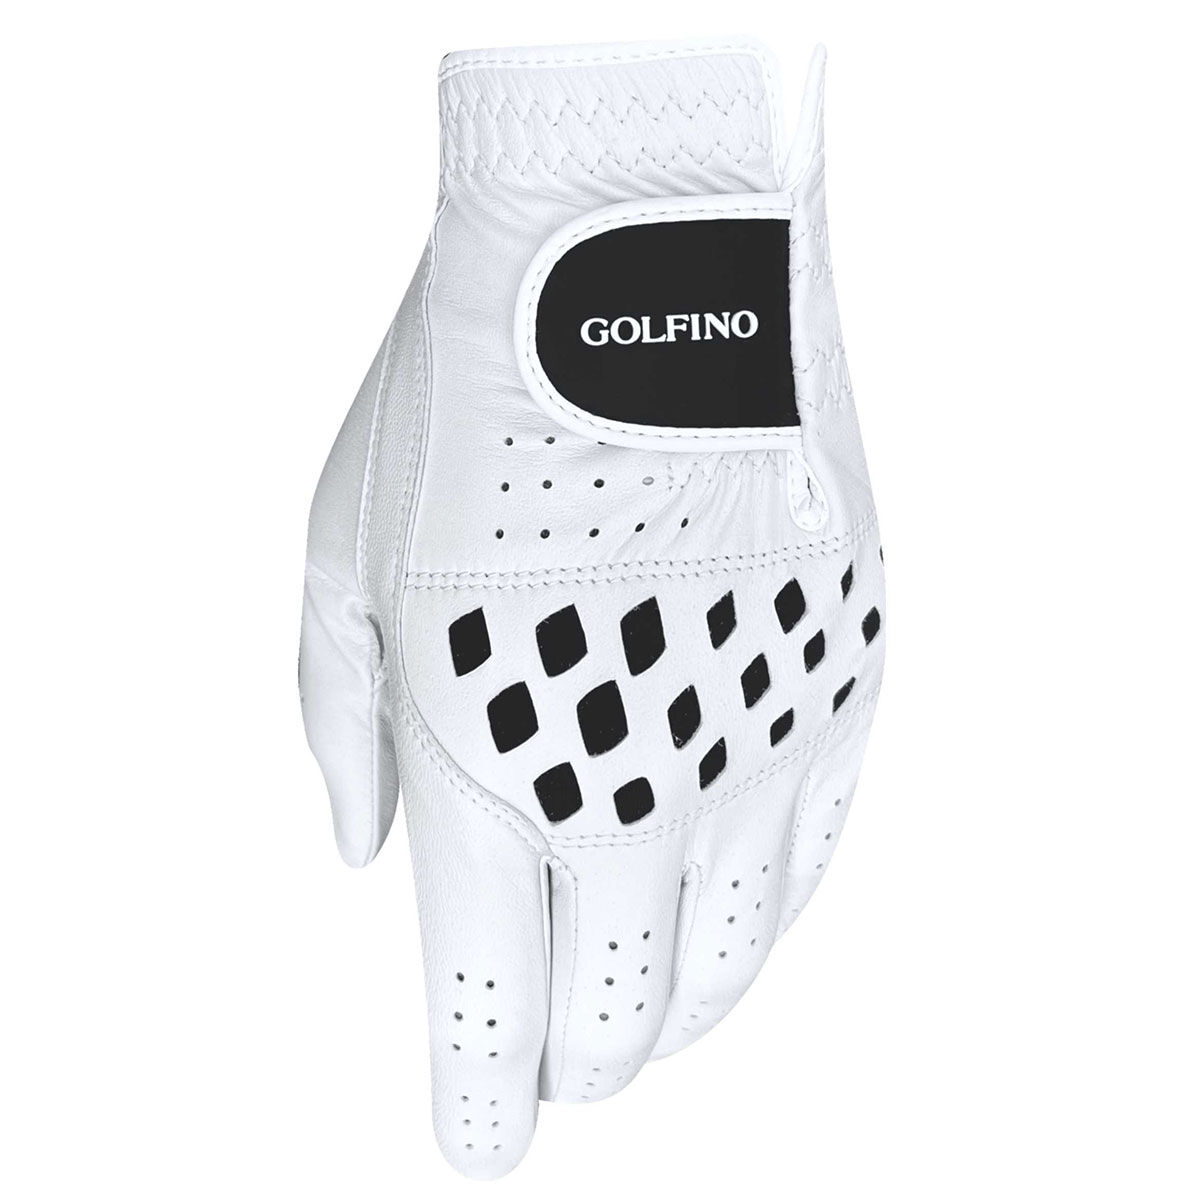 GOLFINO Men's Cabretta Golf Glove, Mens, Left hand, Large, White/black | American Golf von GOLFINO